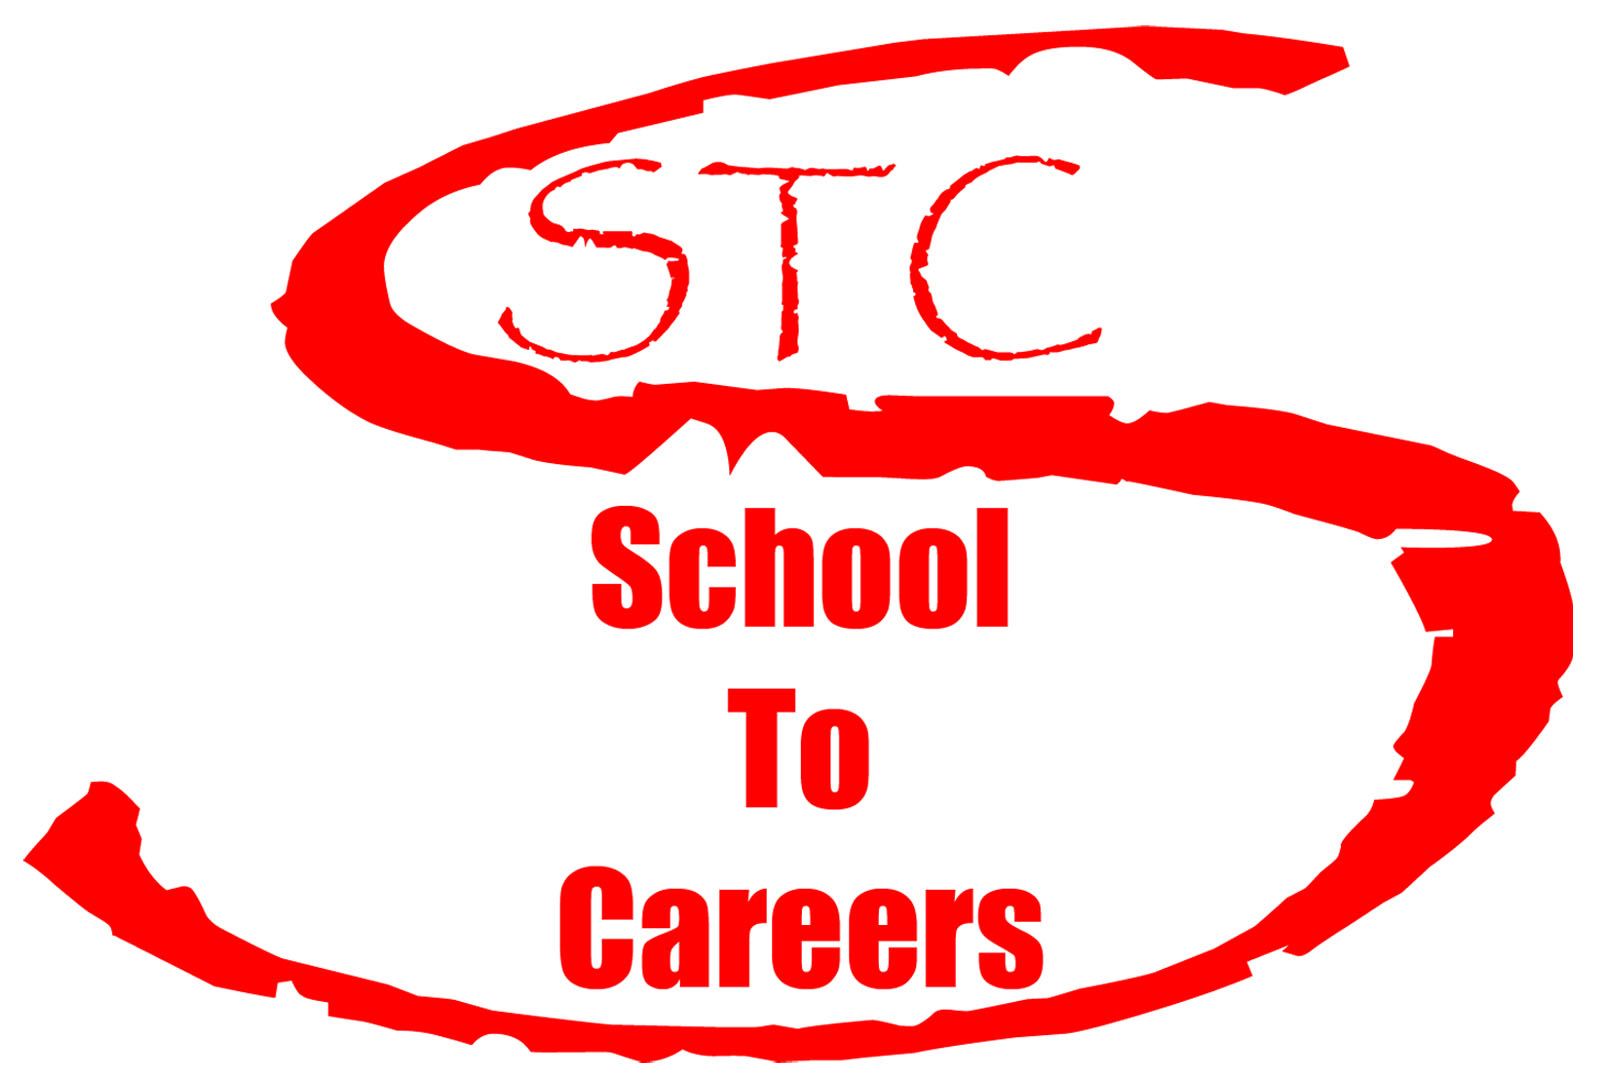 School to Careers logo